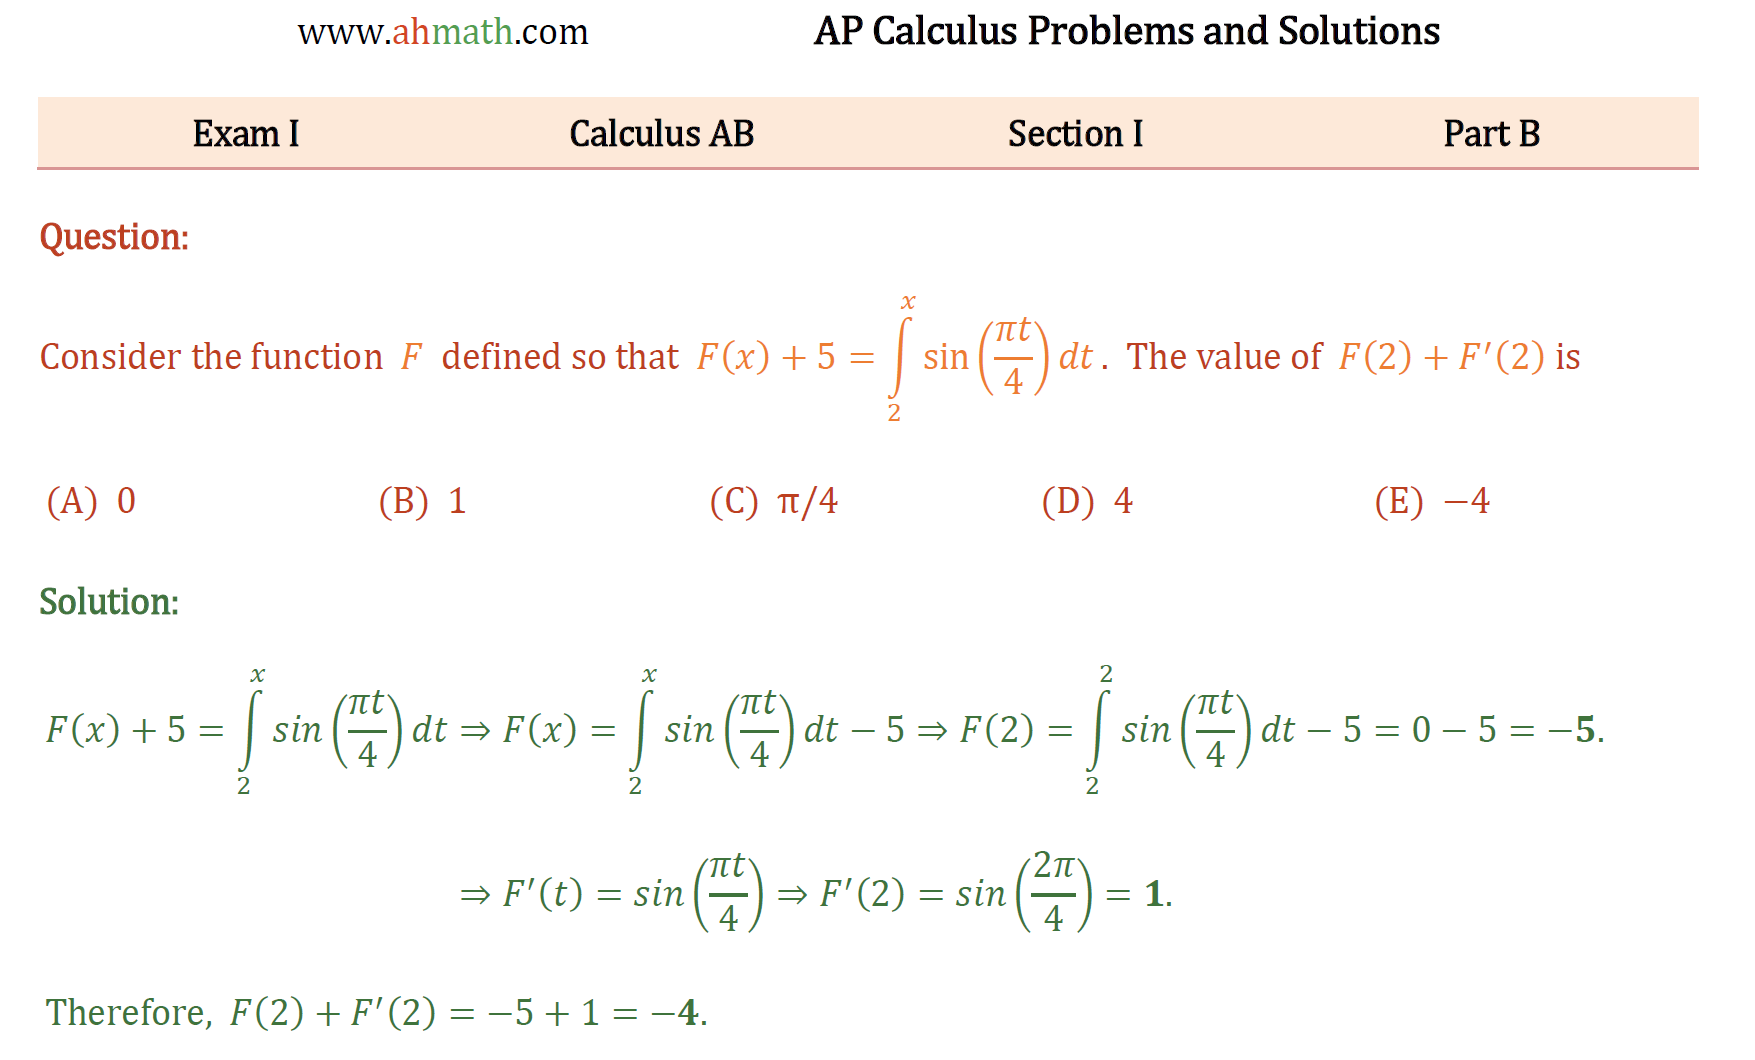 Exam 1 Calculus AB Section I Part B - solution by AhMath